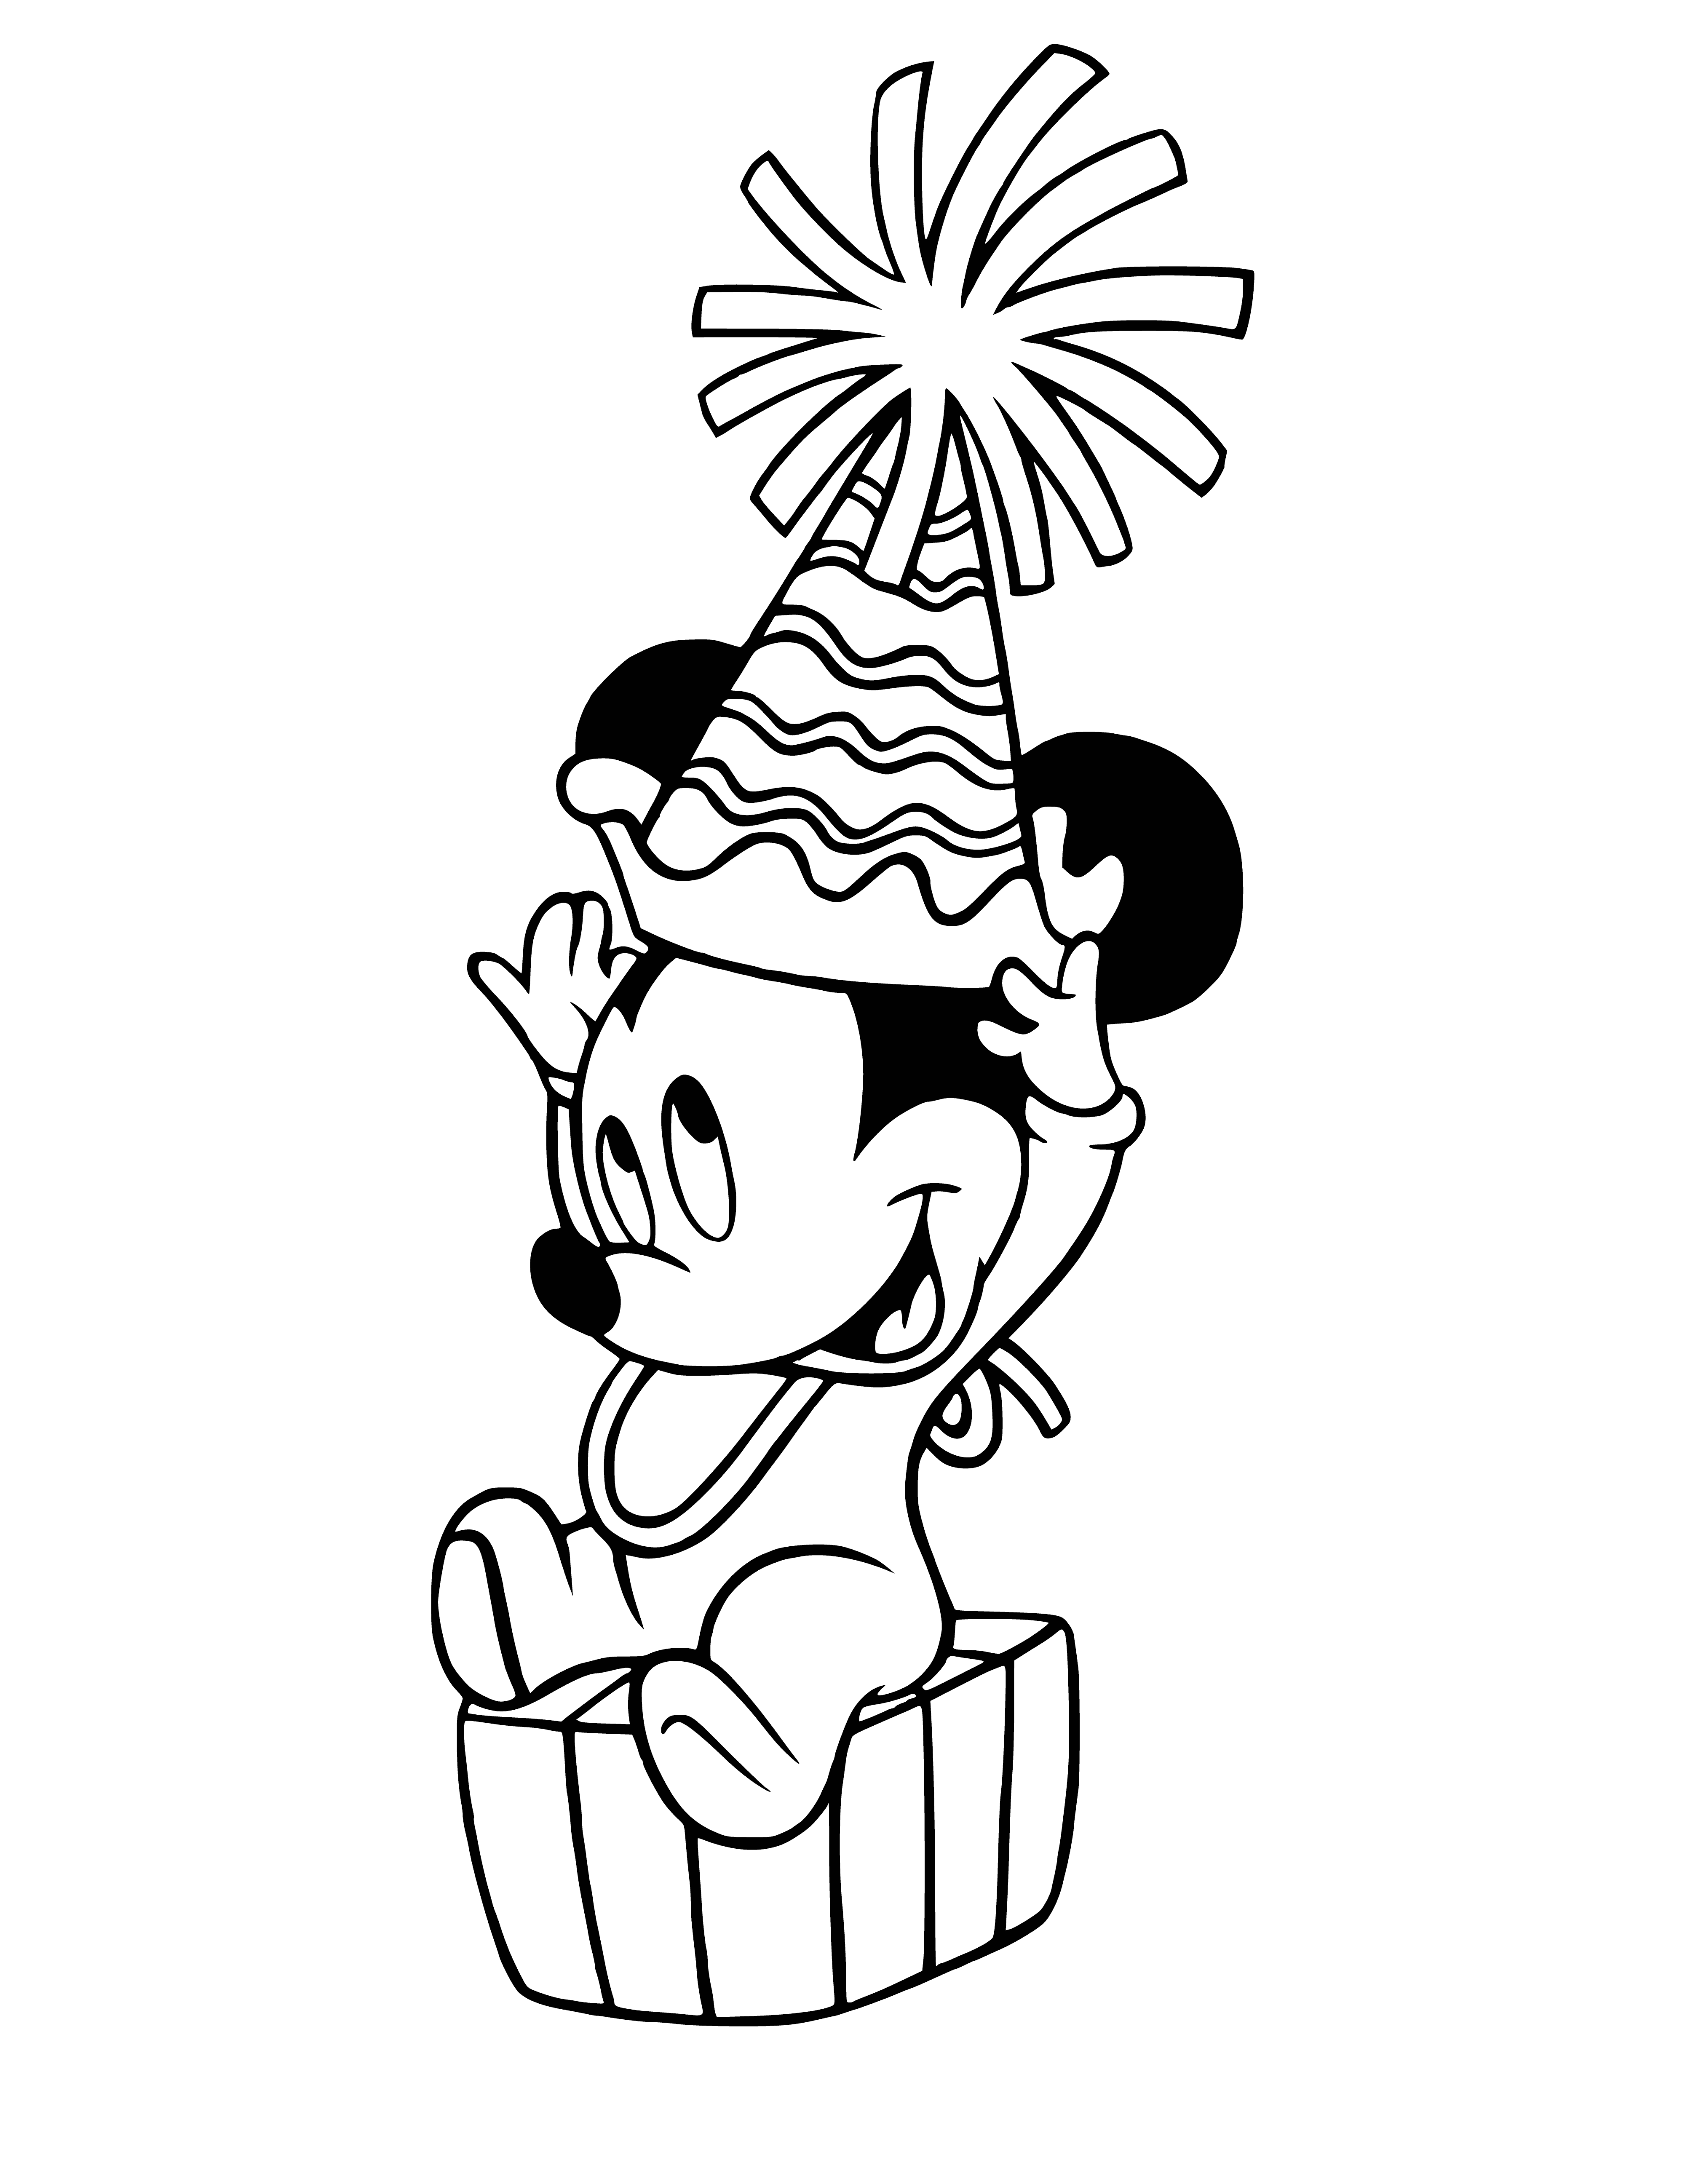 Mickey la souris coloriage